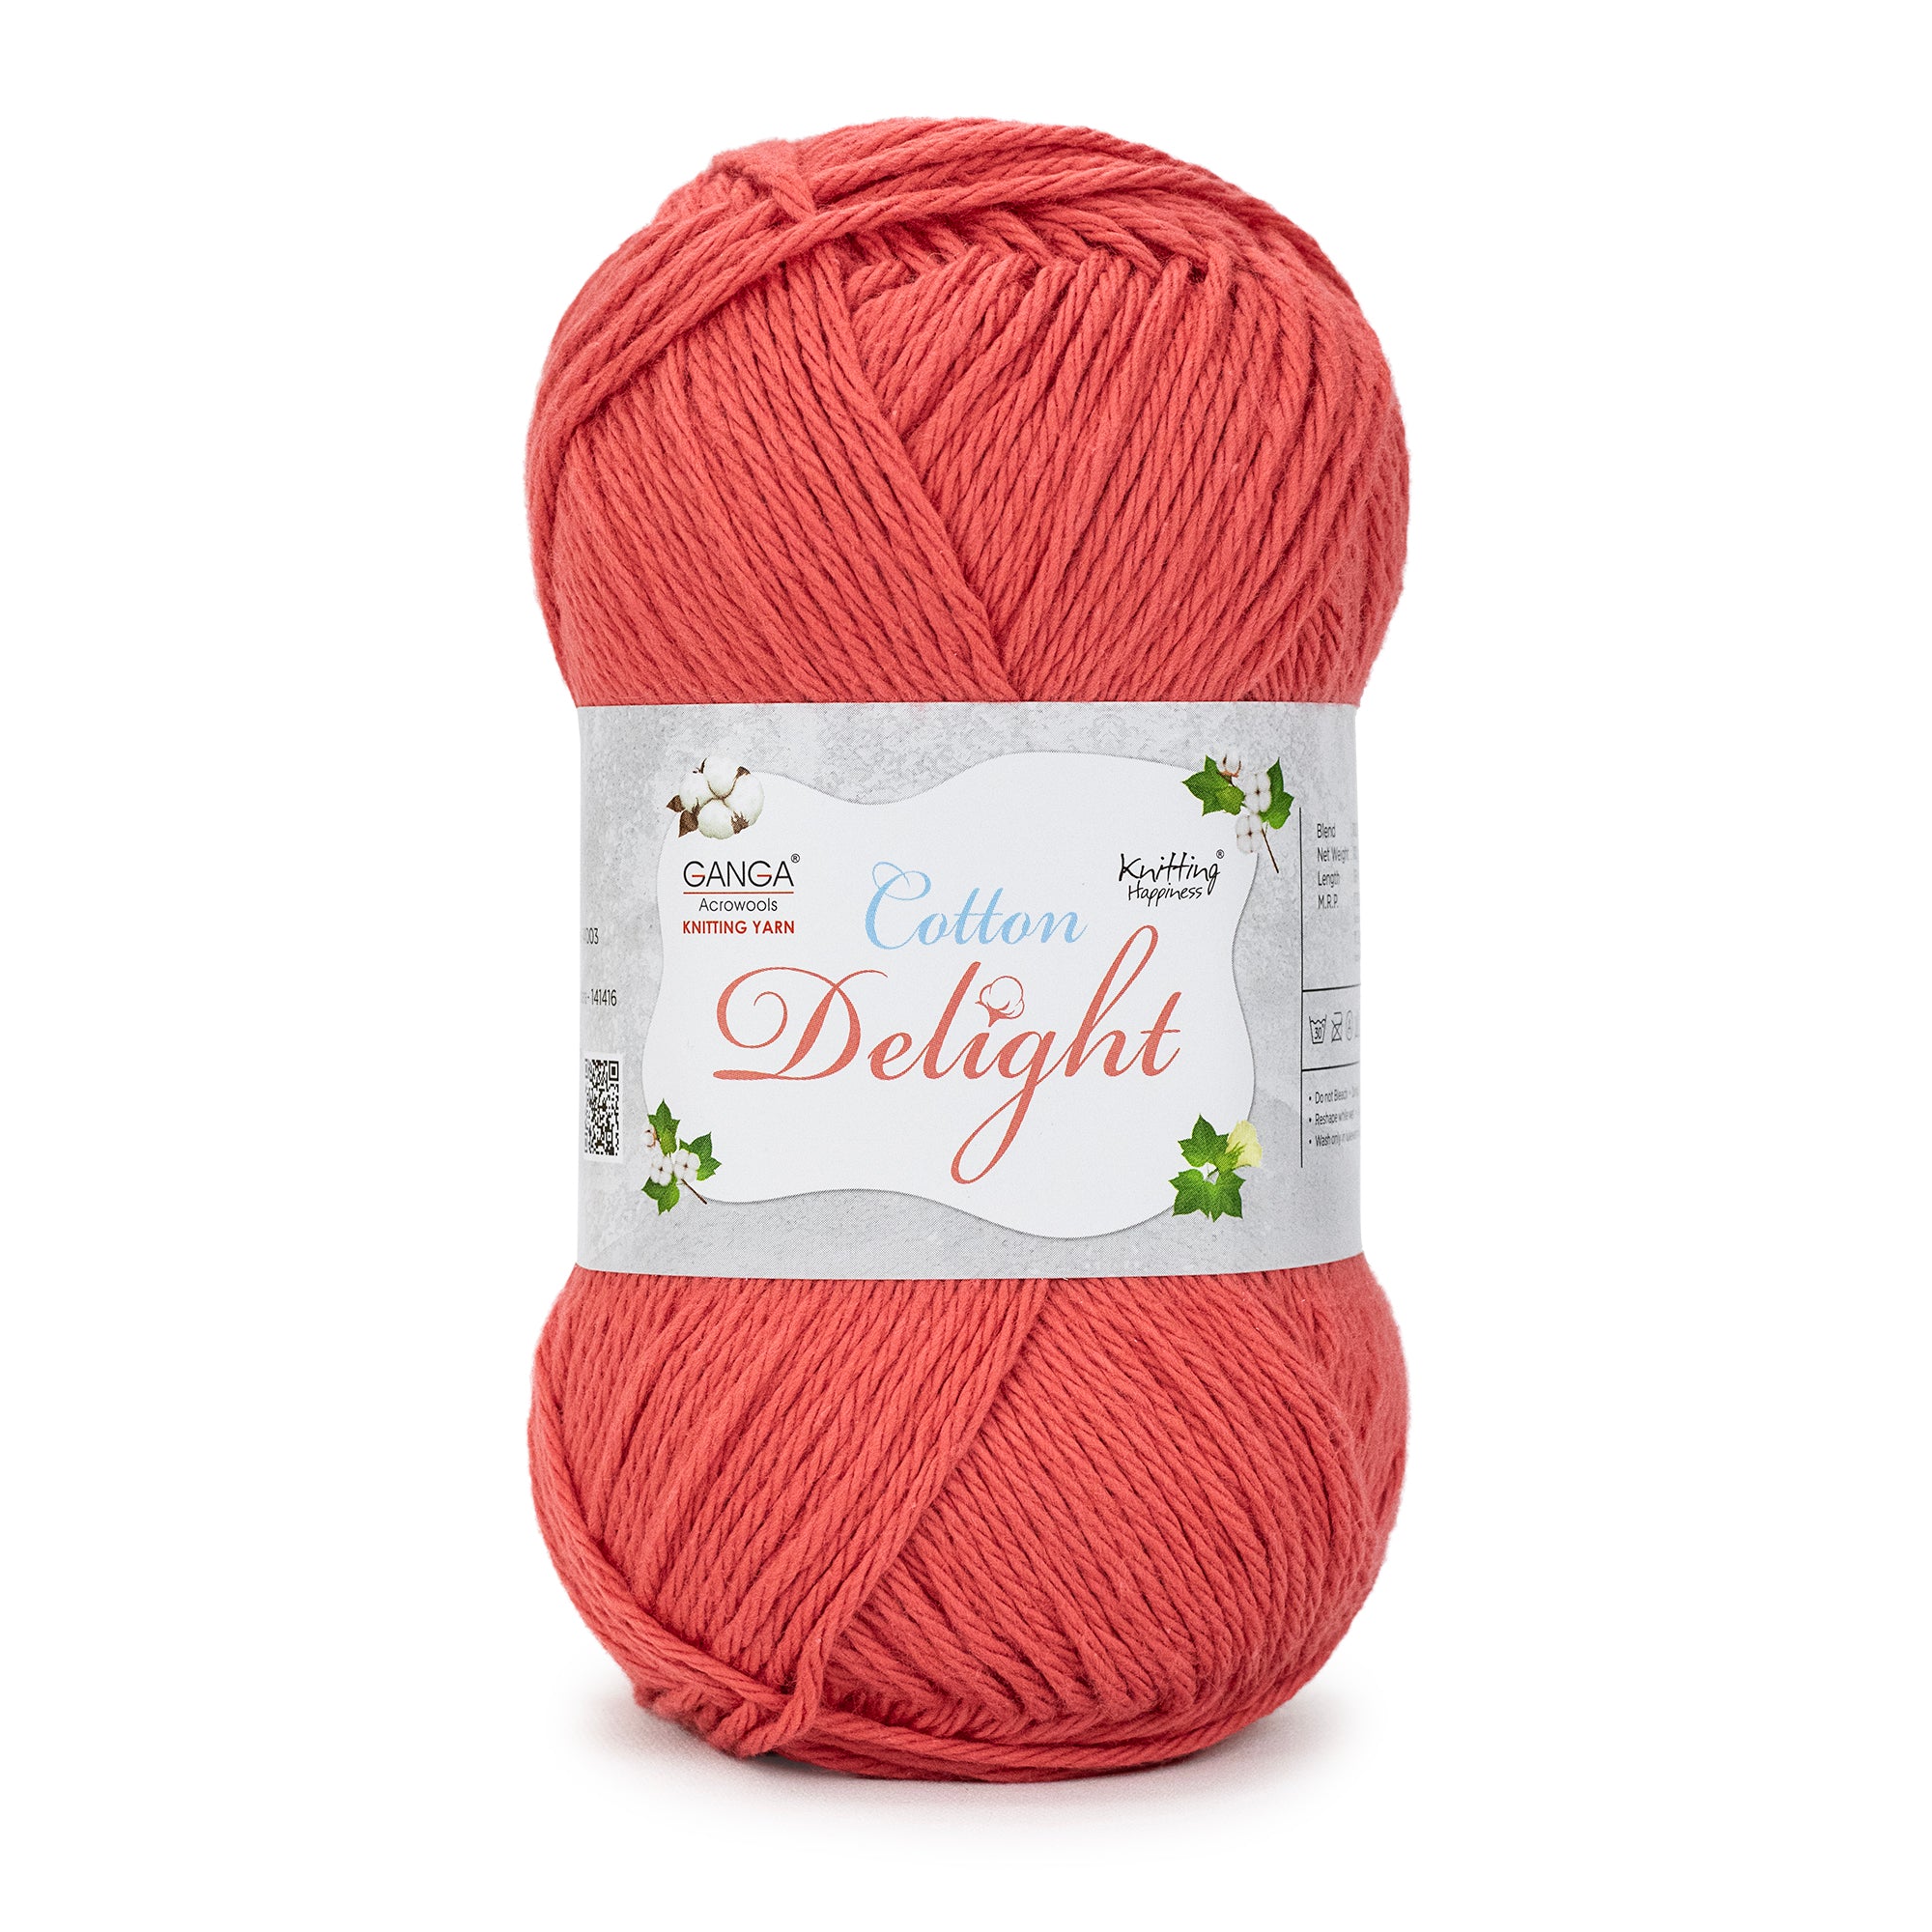 Cotton Delight Knitting Yarn